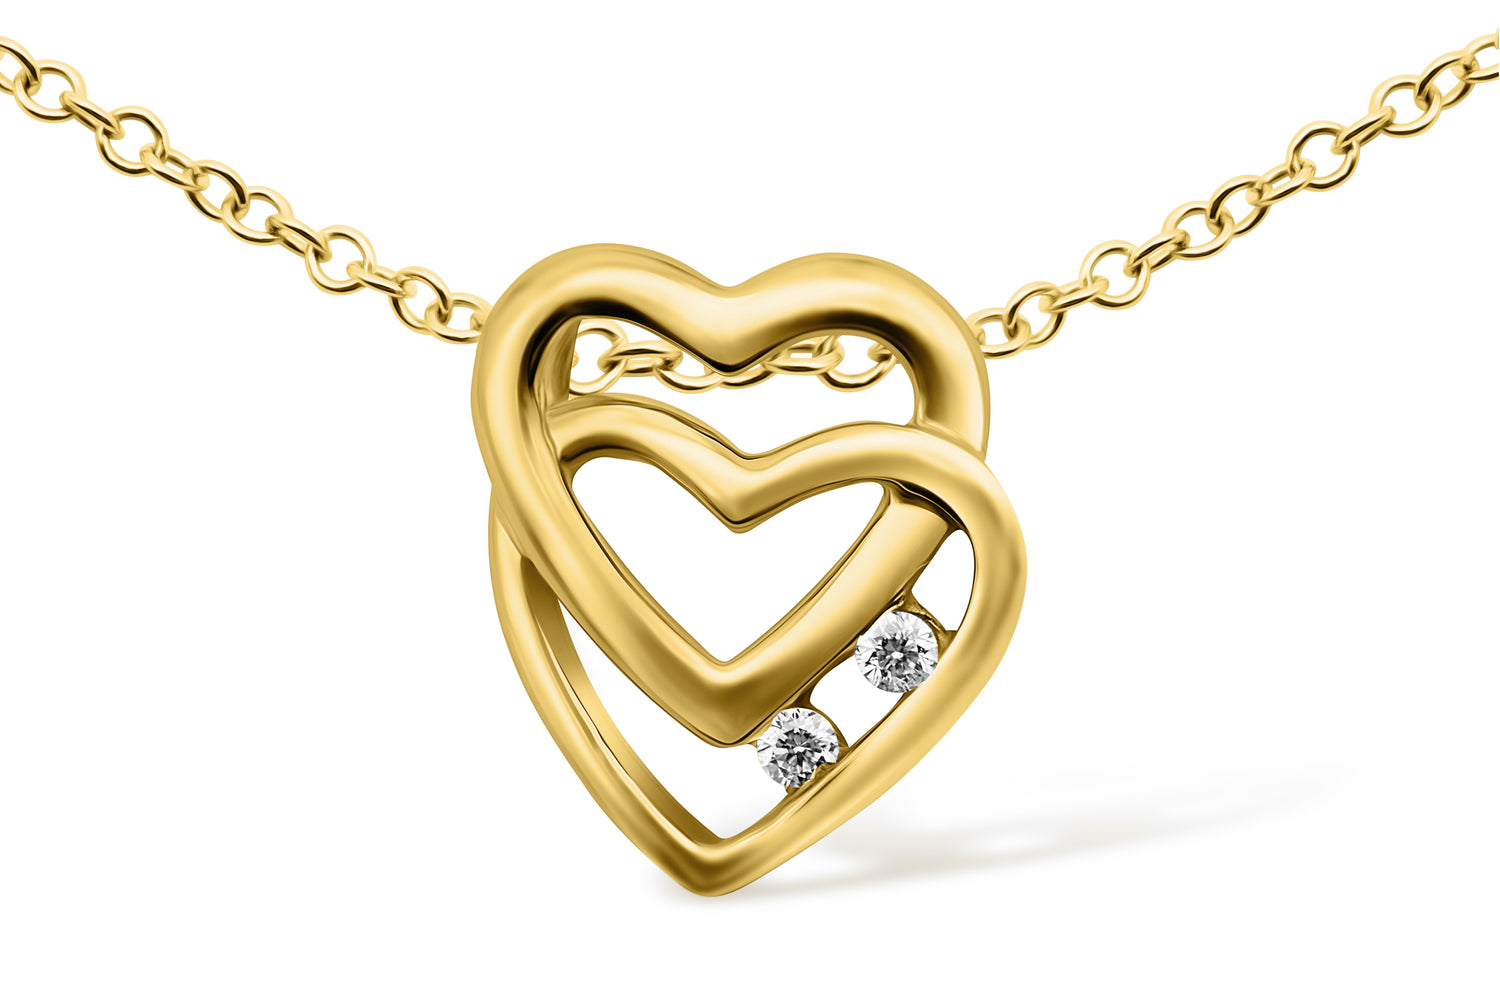 Anhänger Zwei Herzen Gold mit Diamanten - 750 Gelbgold 0,02ct Diamantanhänger an Kette gerade gehängt